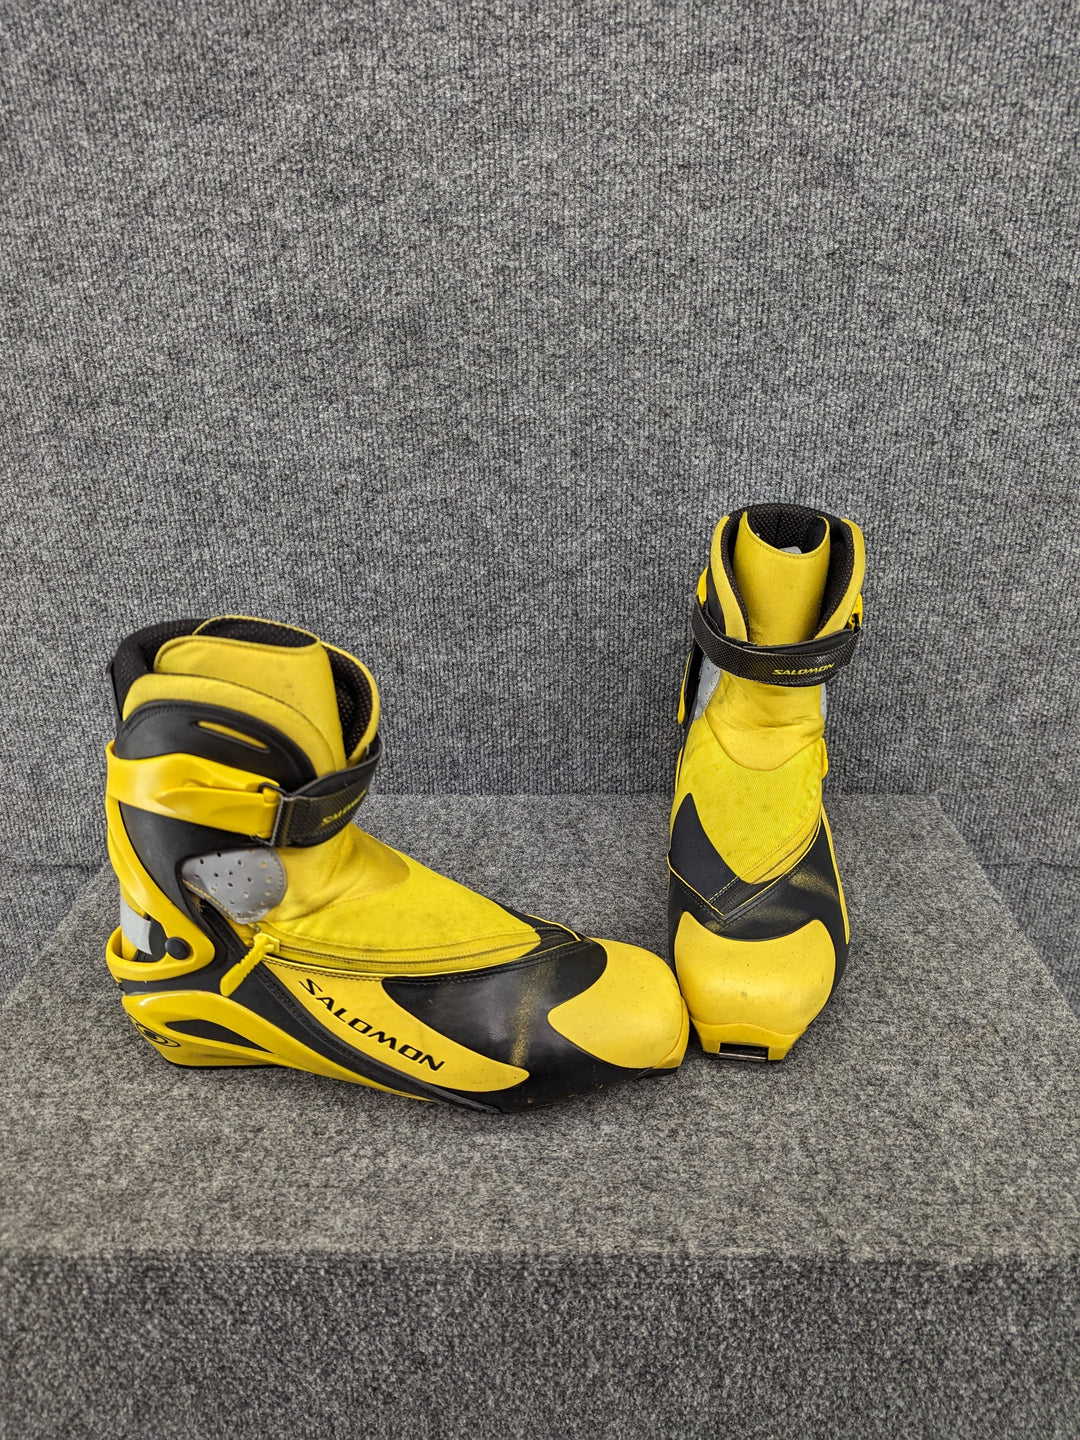 Salomon Size 12.5/46 Cross Country Ski Boots